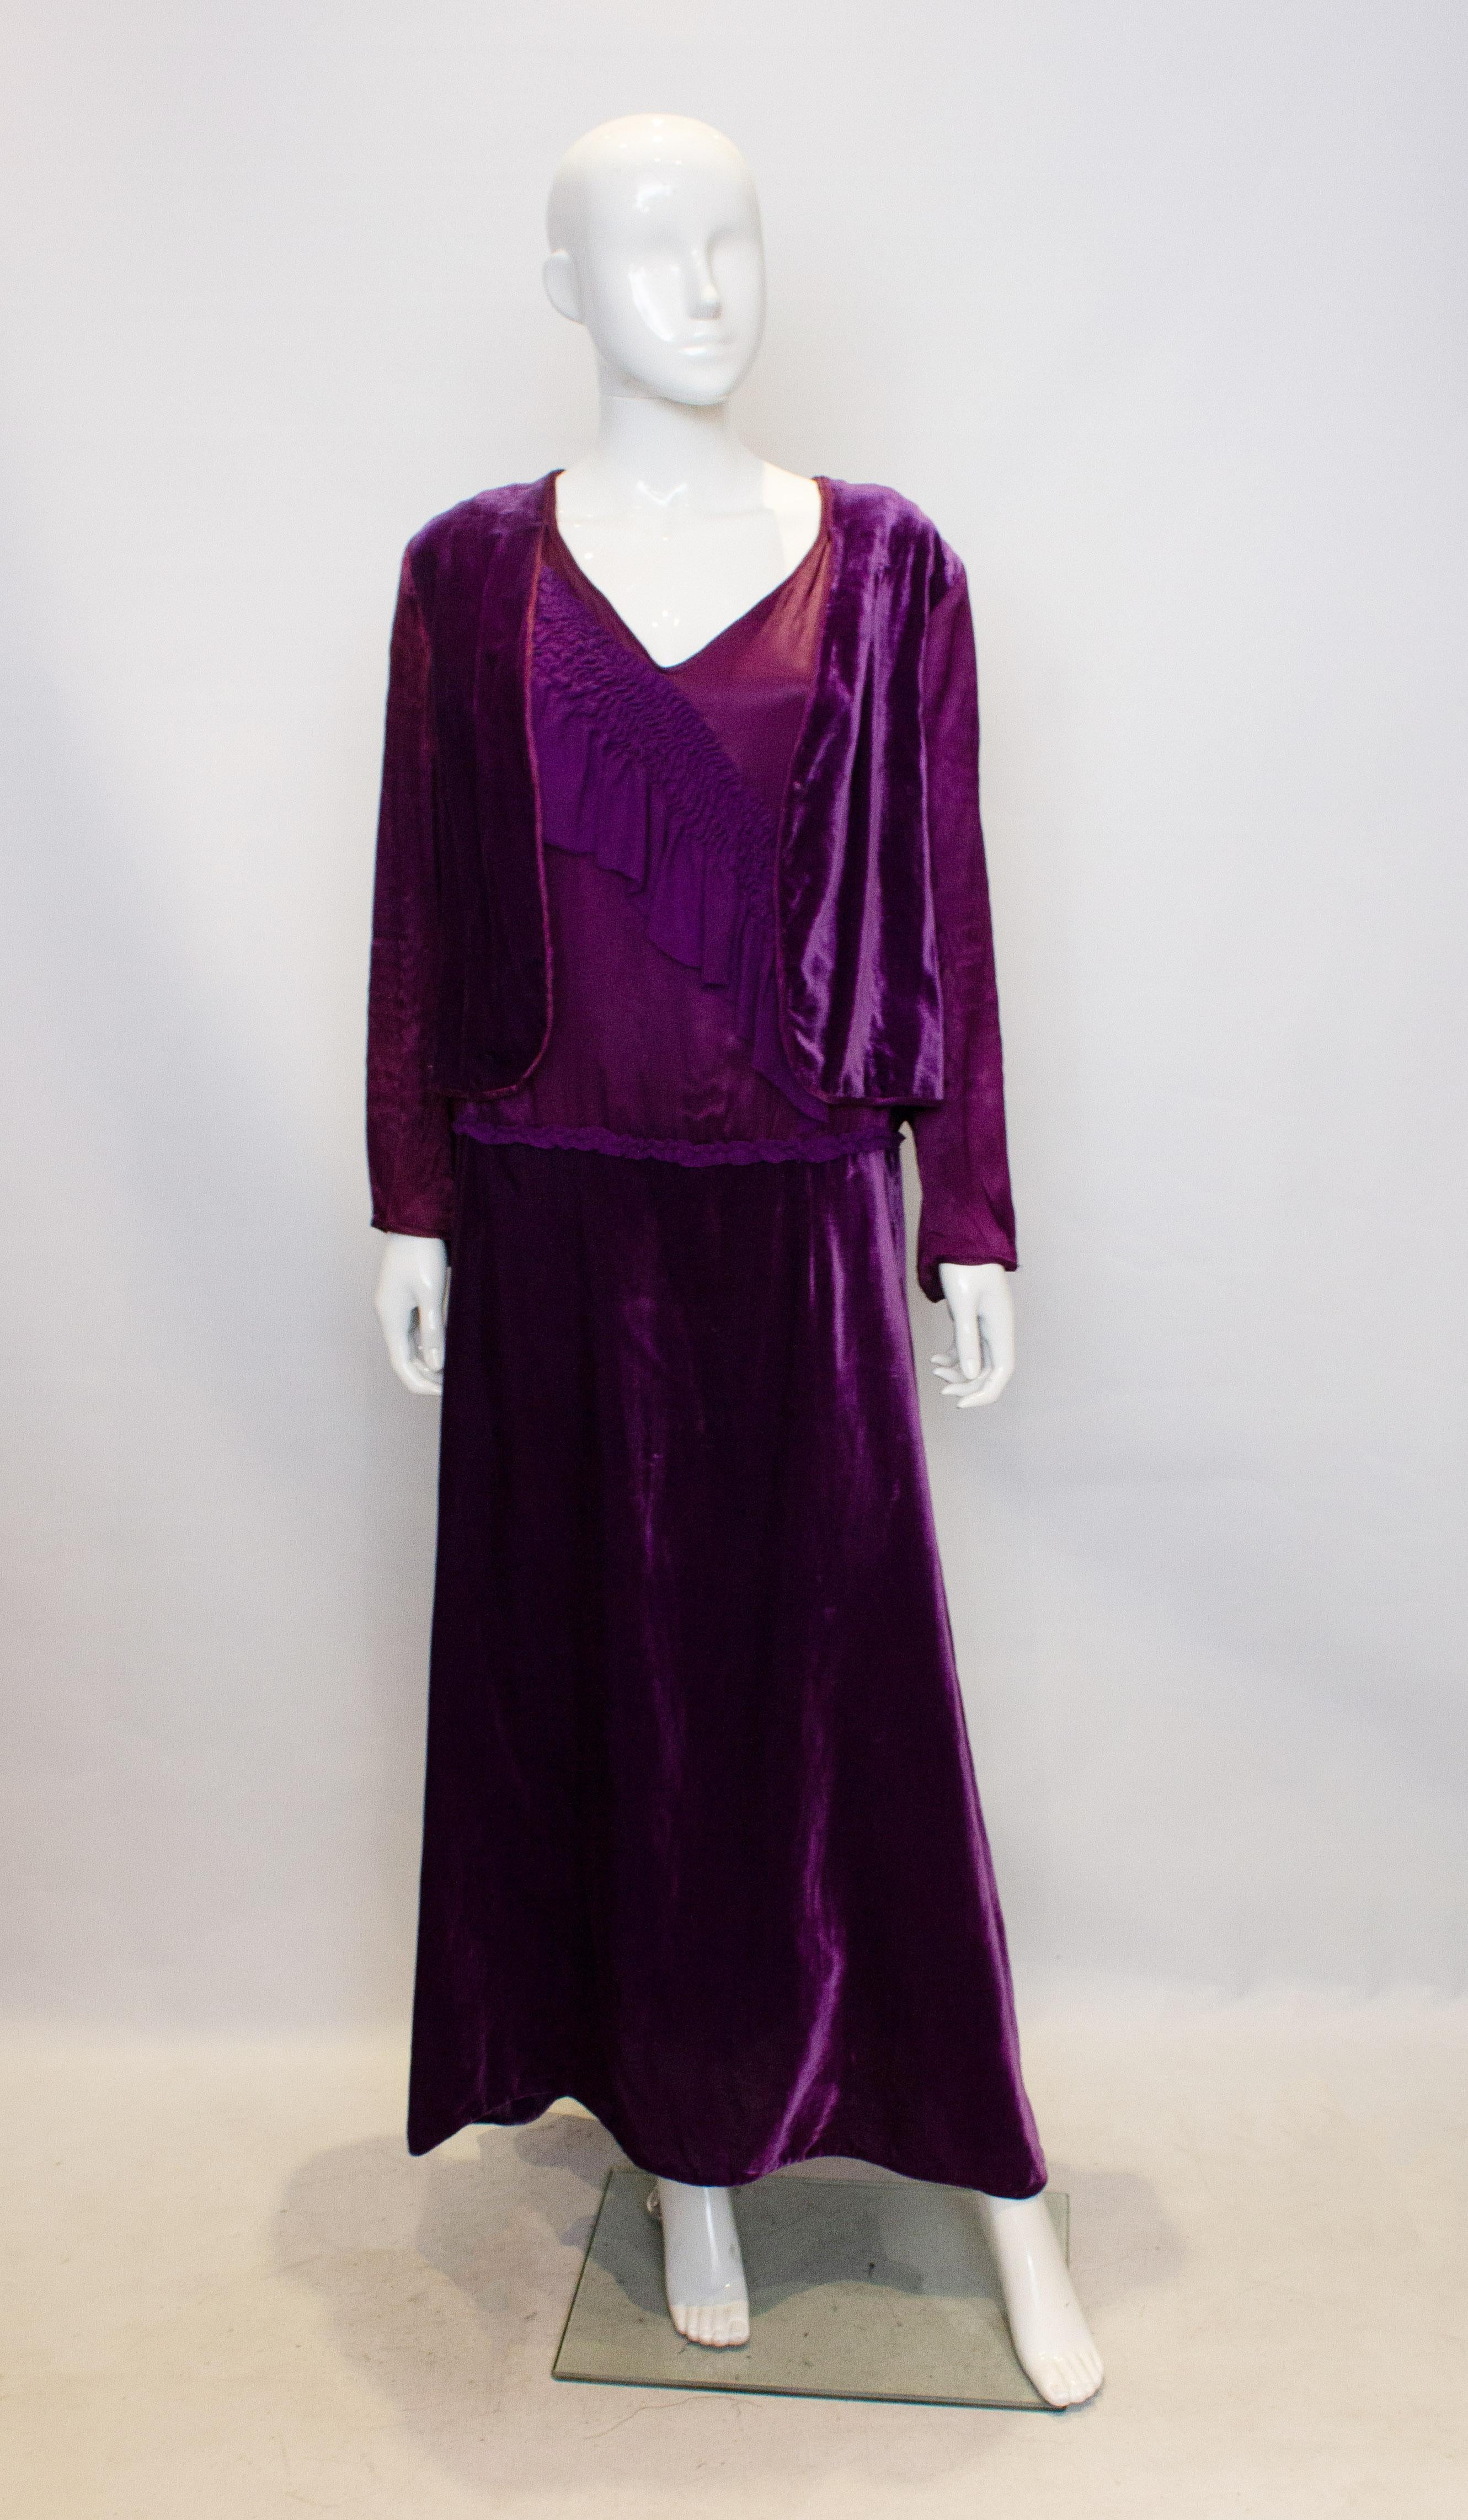 authentic 1920s dress